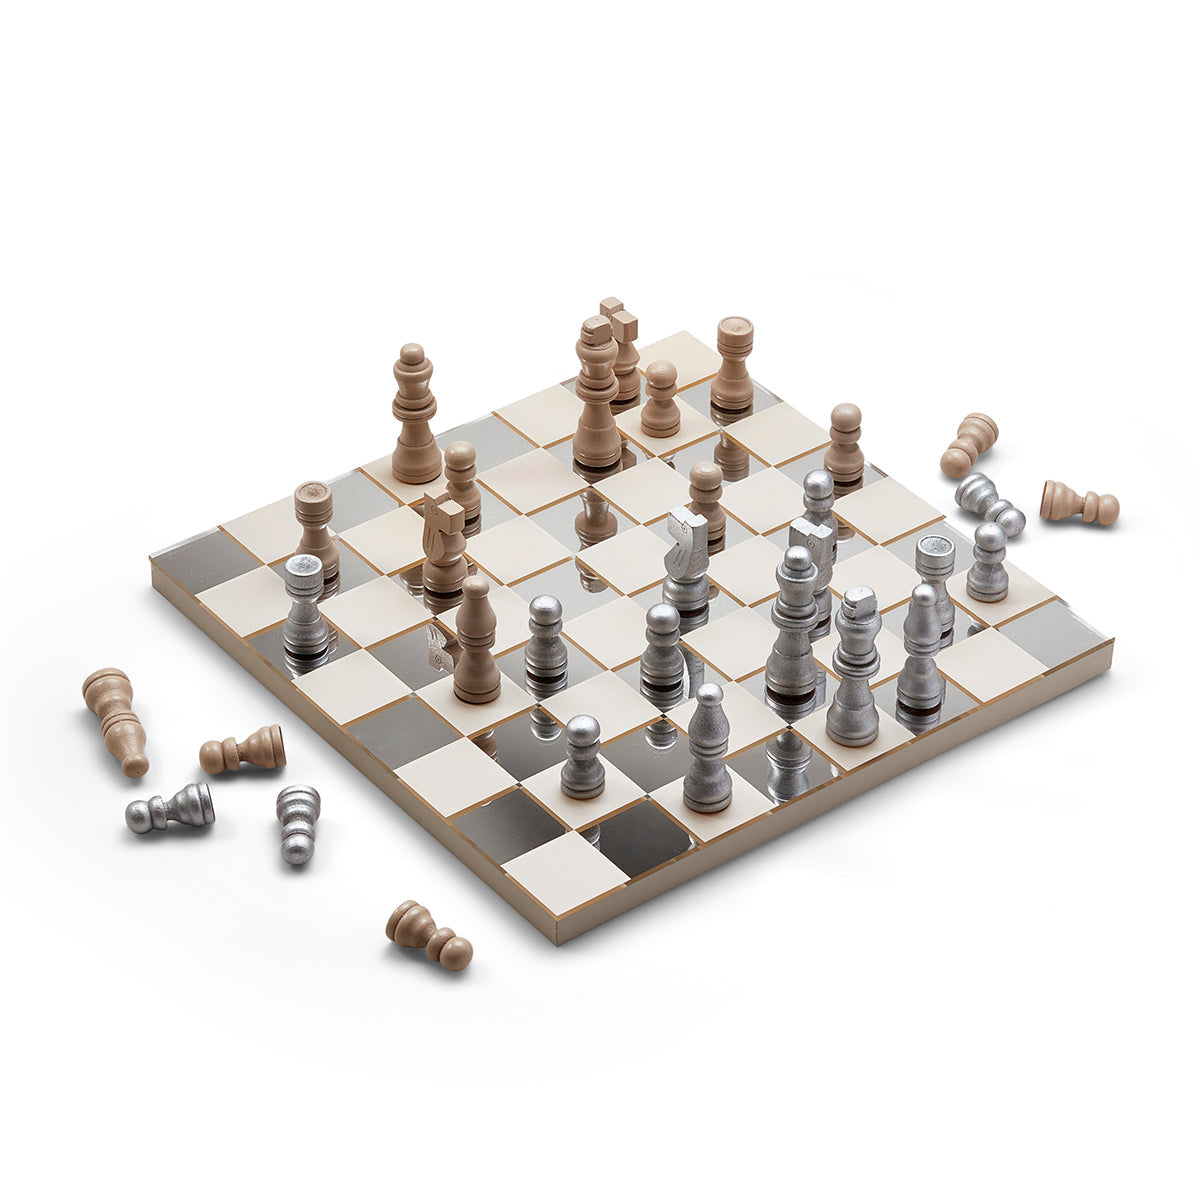 Printworks Classic Chess set